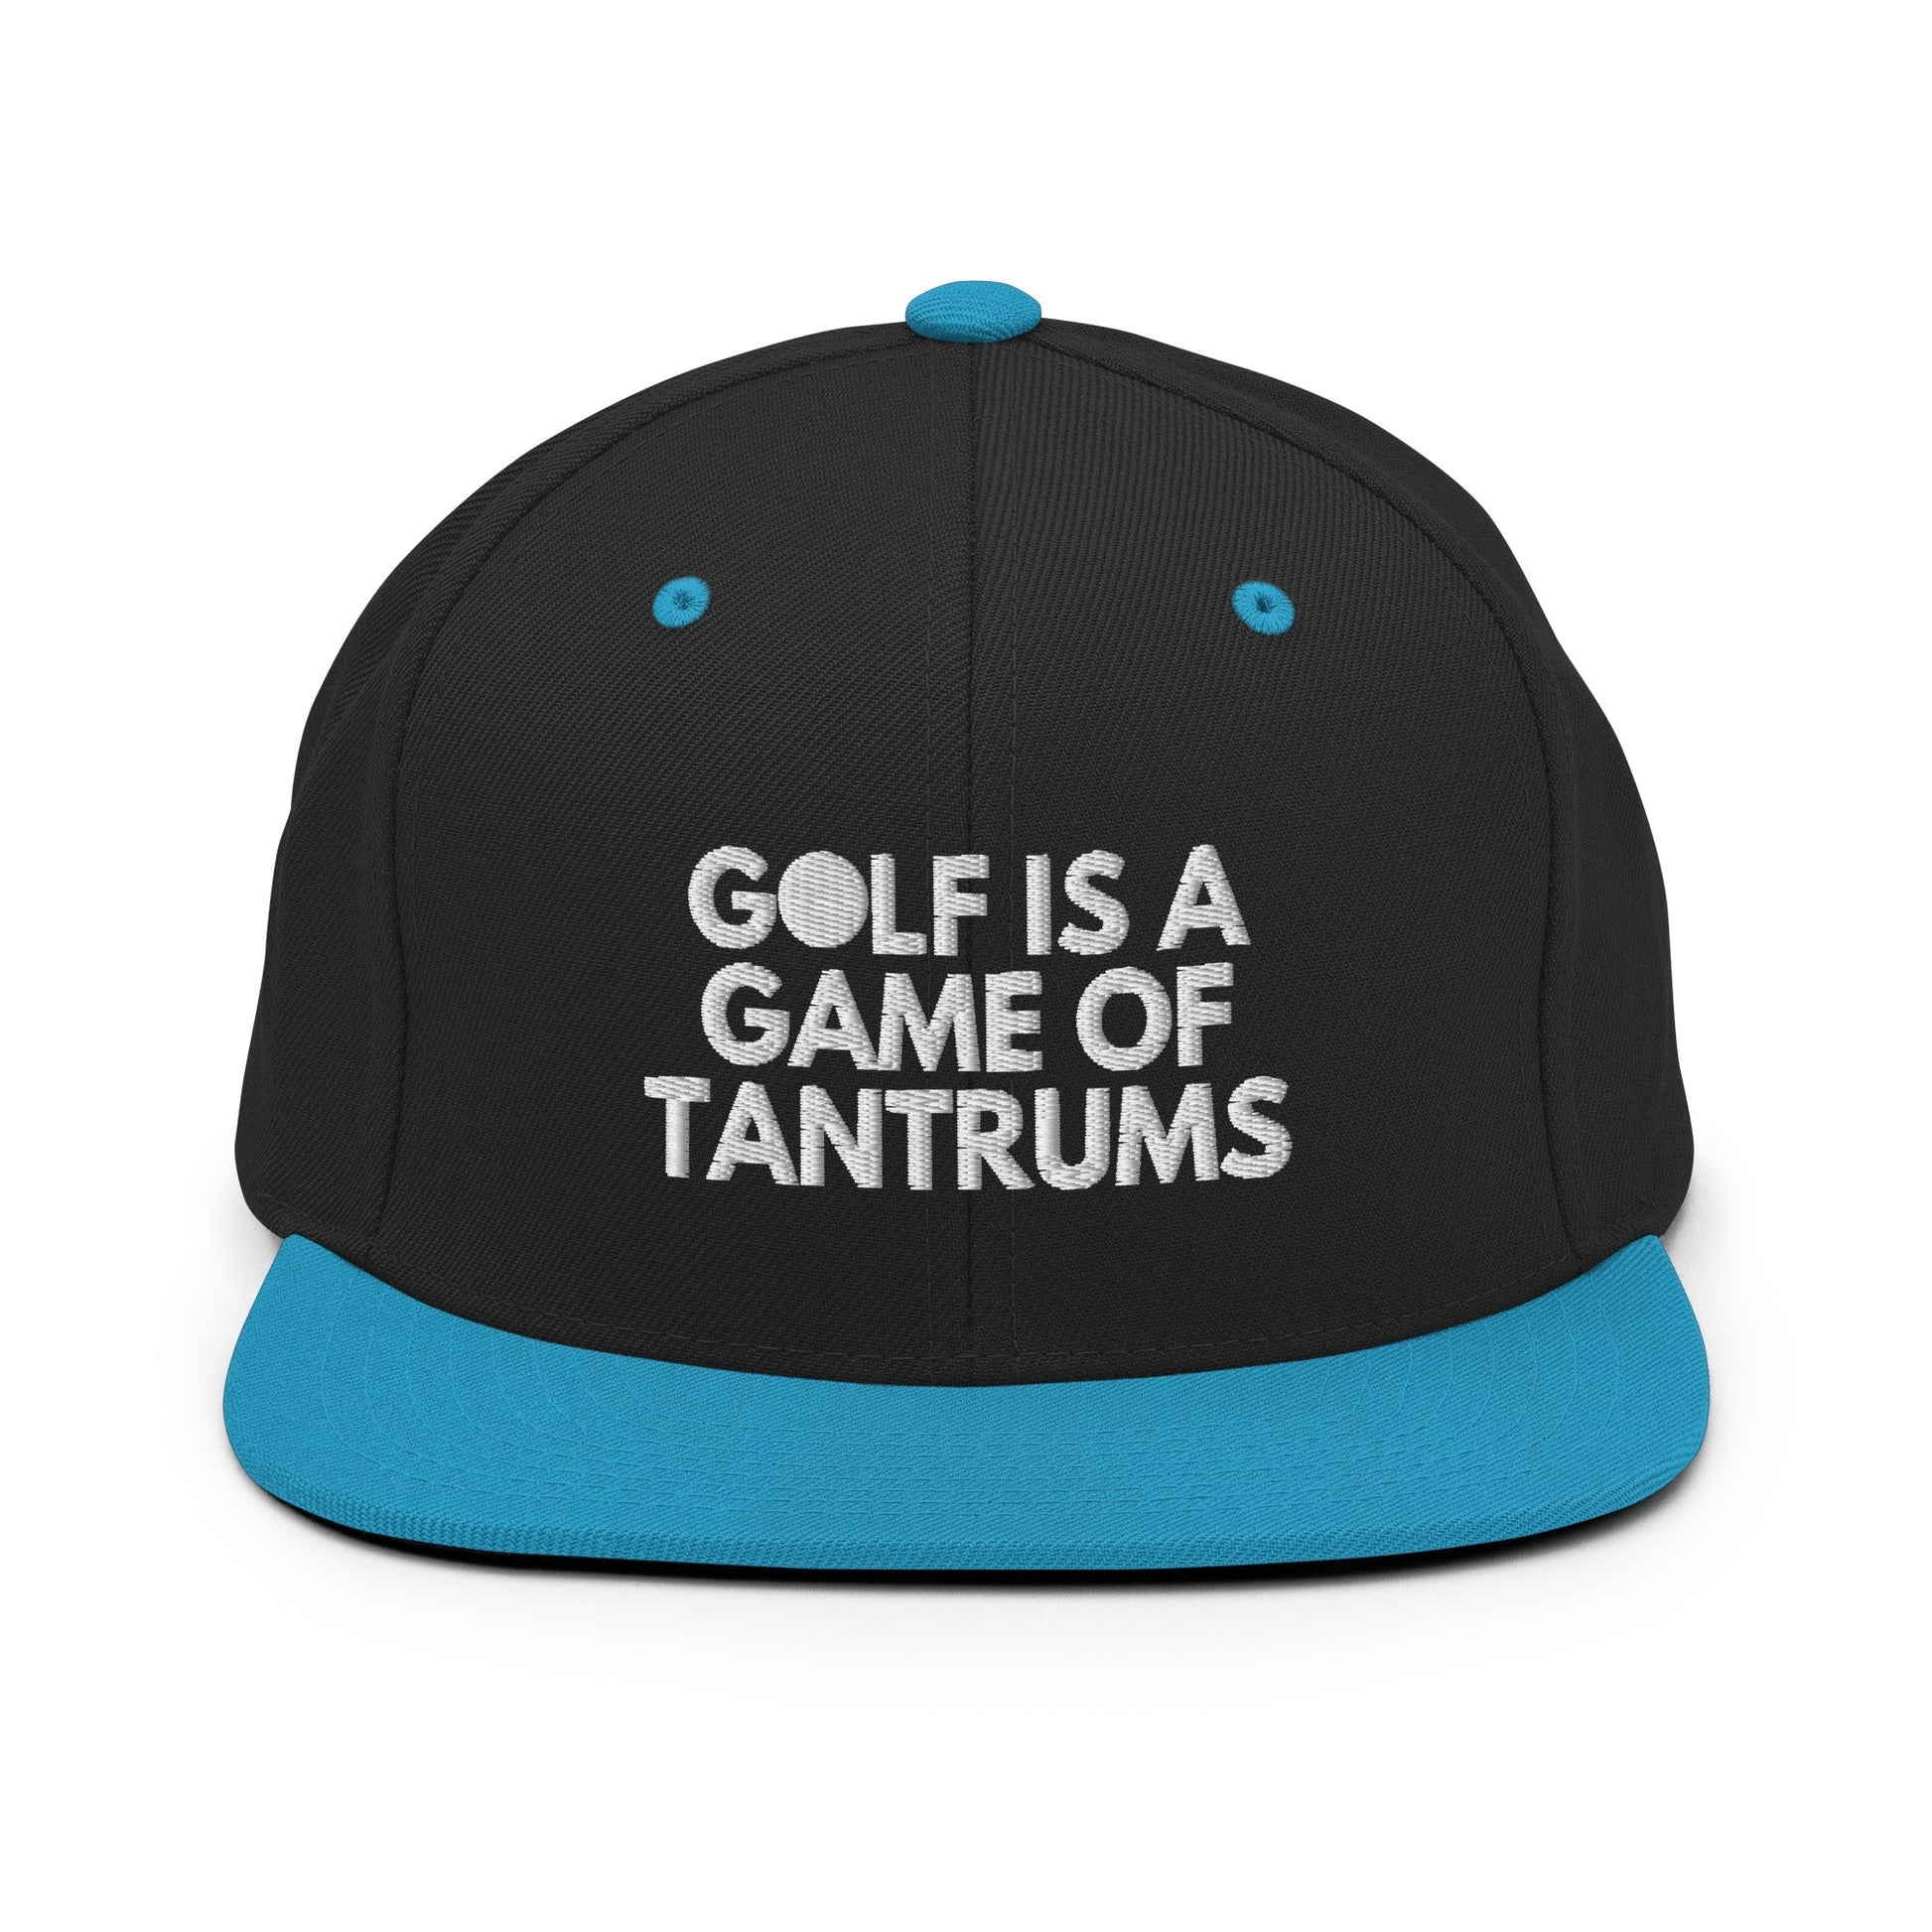 Funny Golfer Gifts  Snapback Hat Black/ Teal Golf Is A Game Of Tantrums Hat Snapback Hat